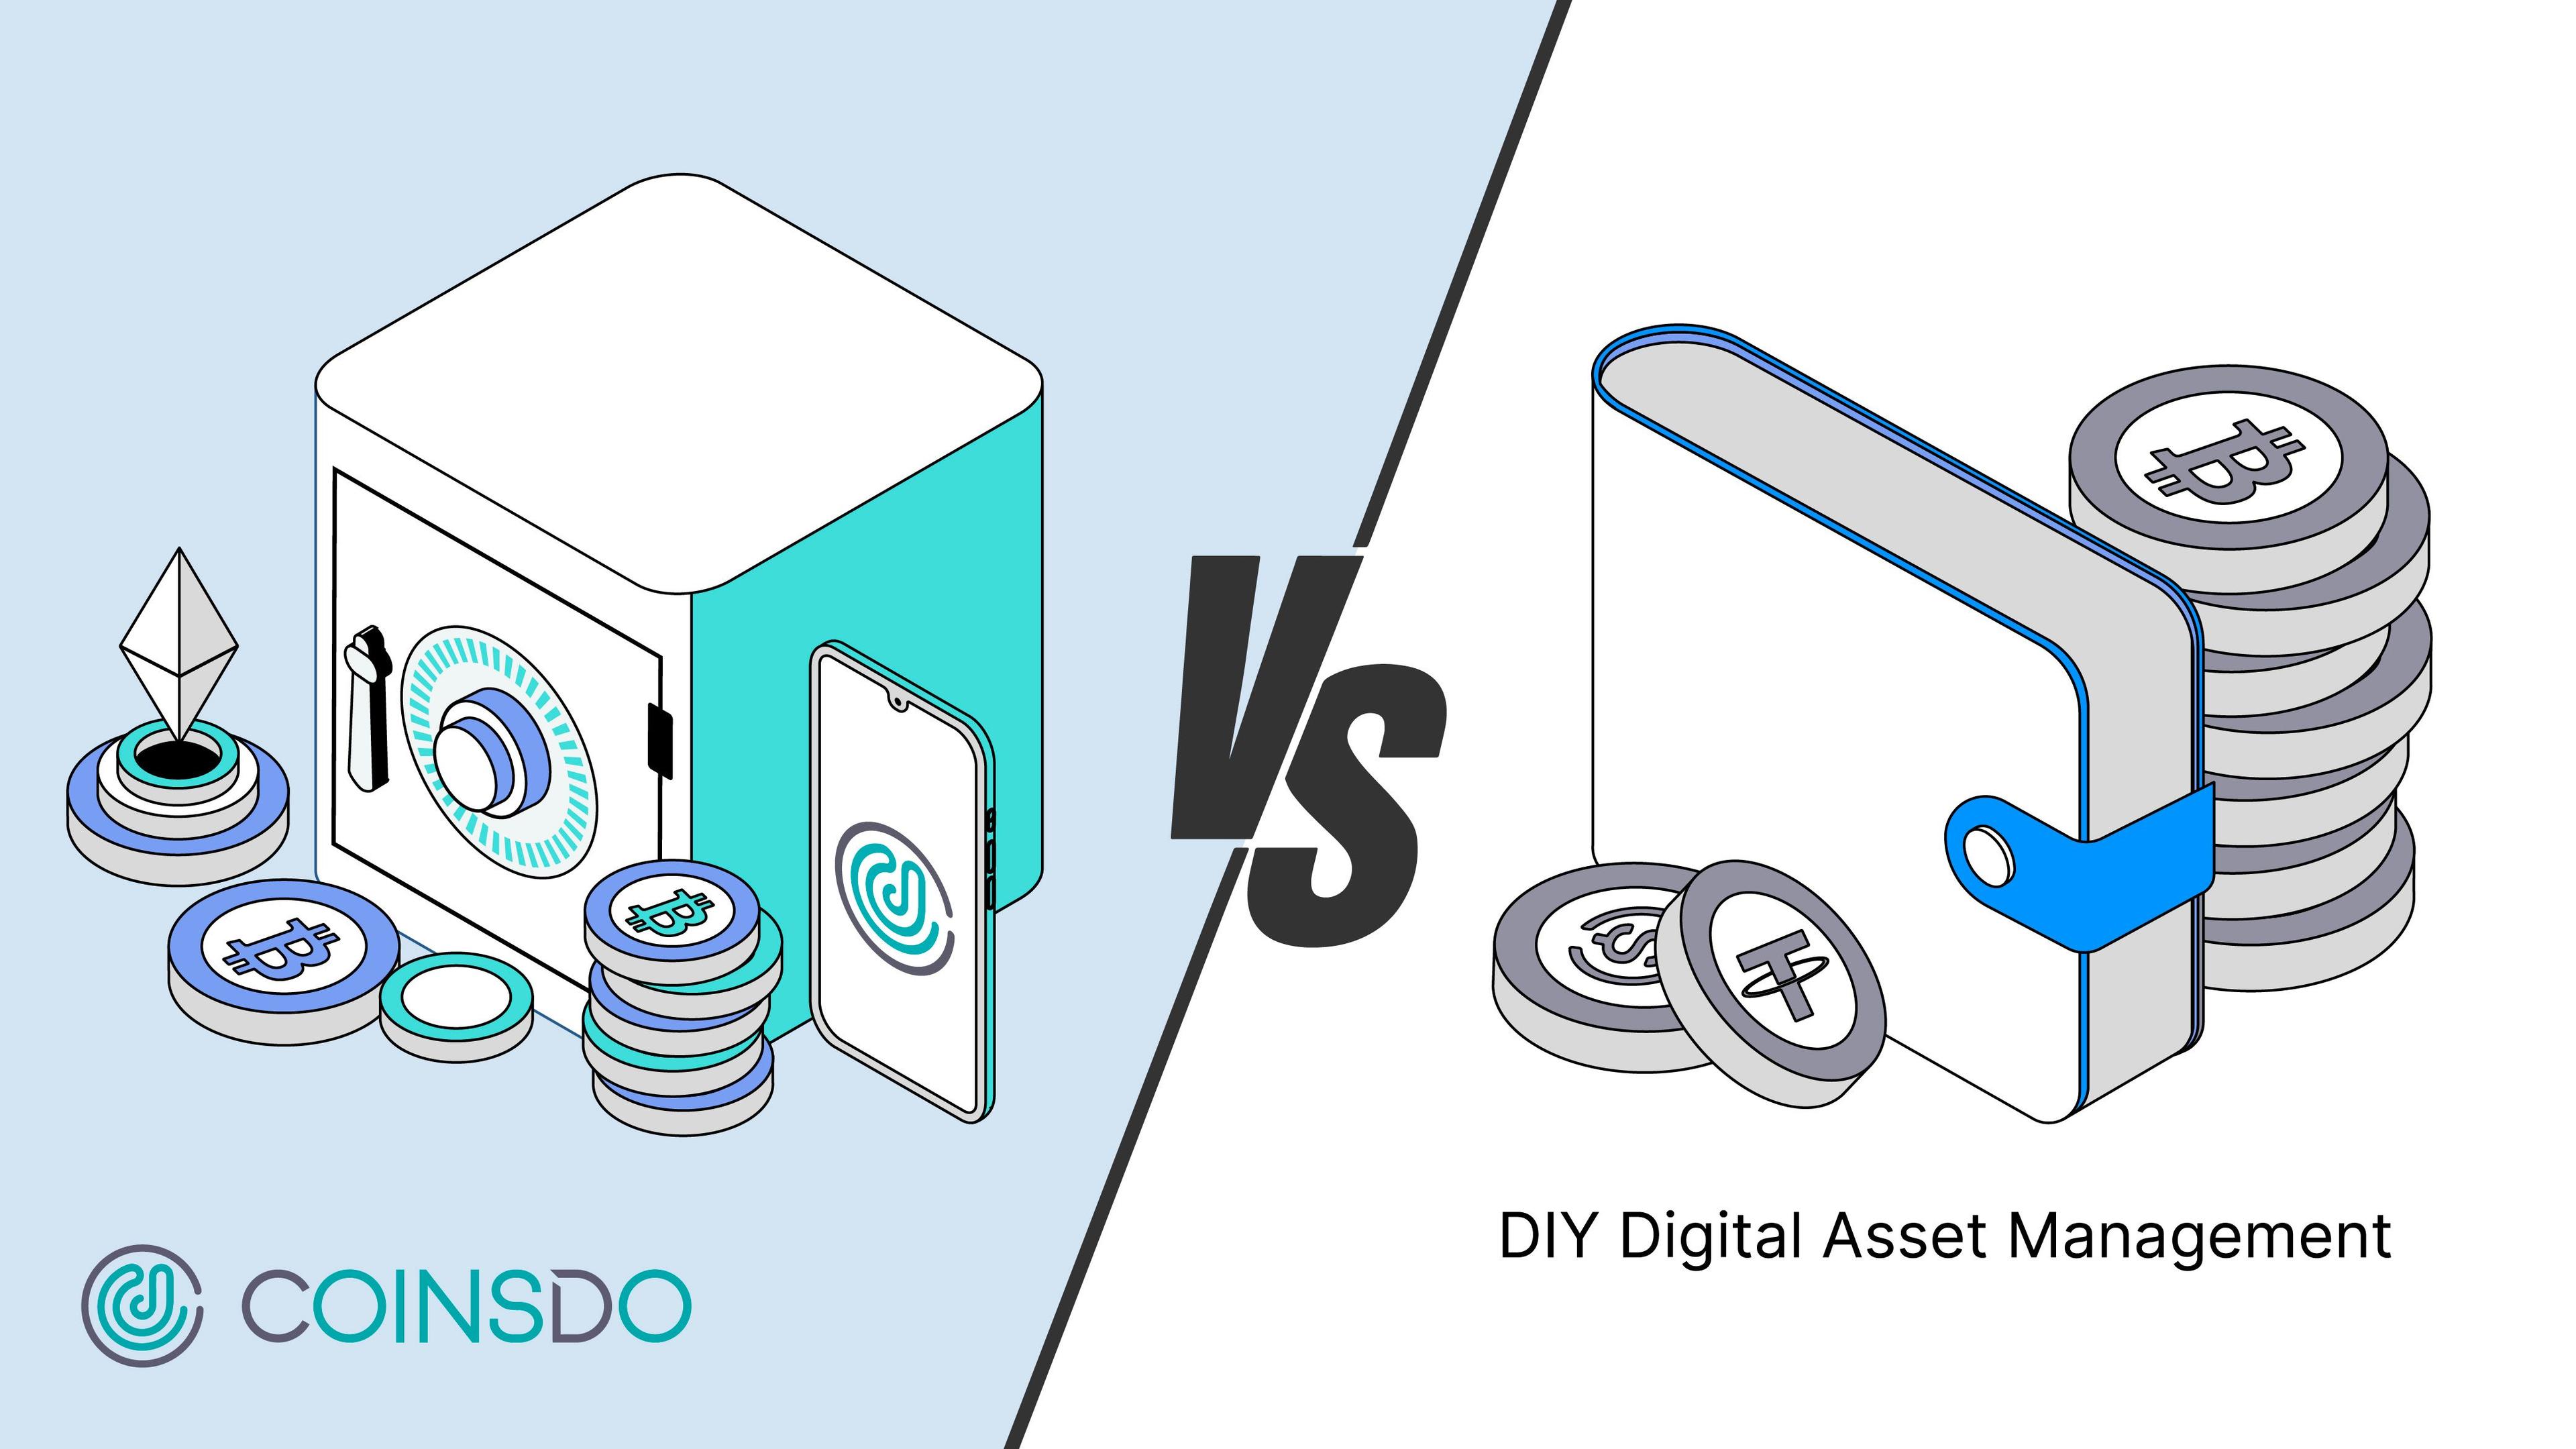 The Better Option for Digital Asset Management: CoinsDo or DIY?